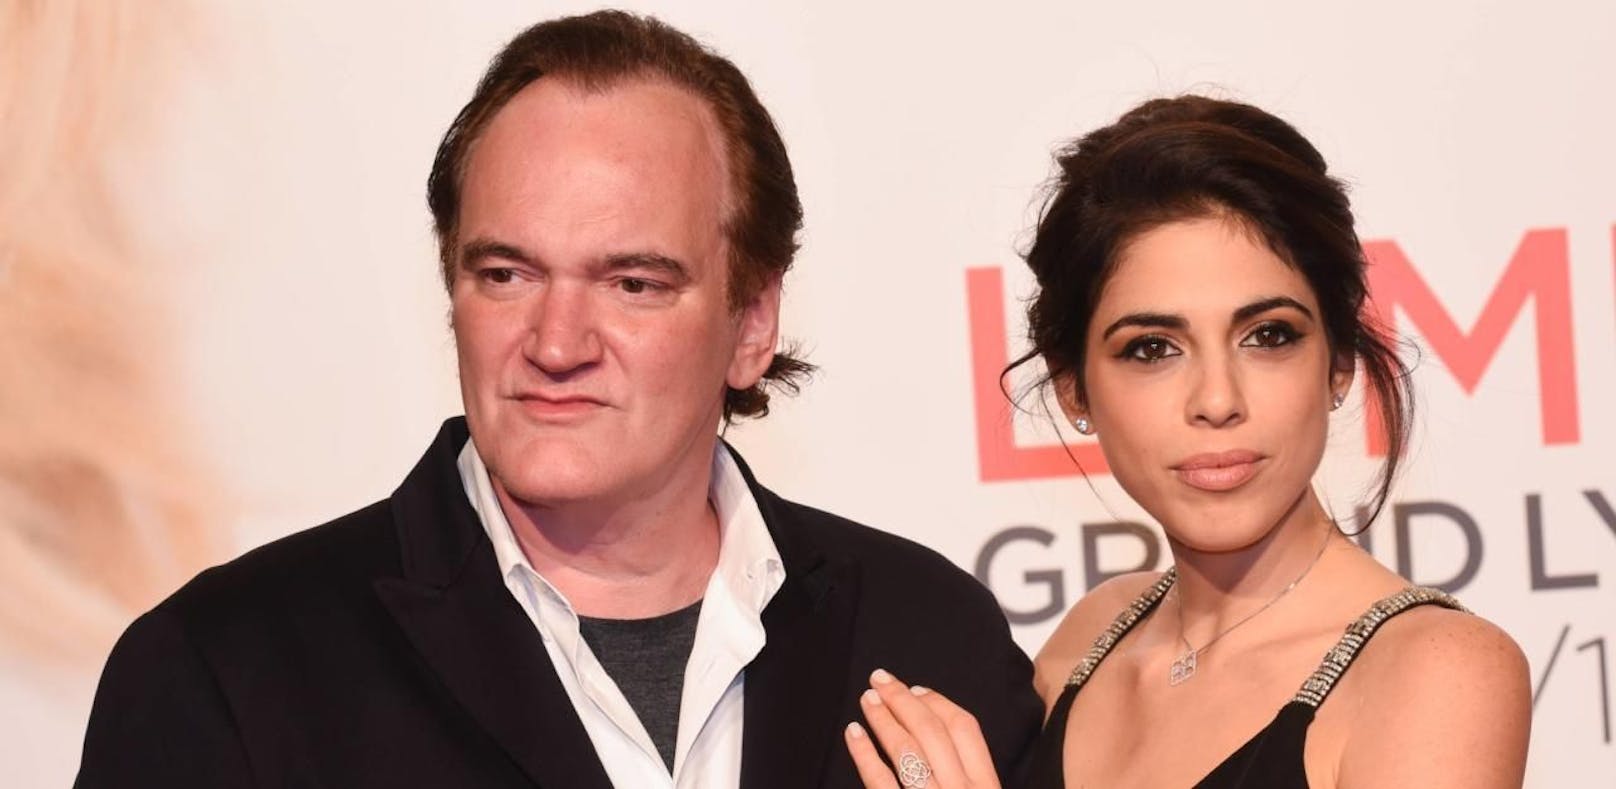 Kultregisseur Tarantino wird erstmals Vater